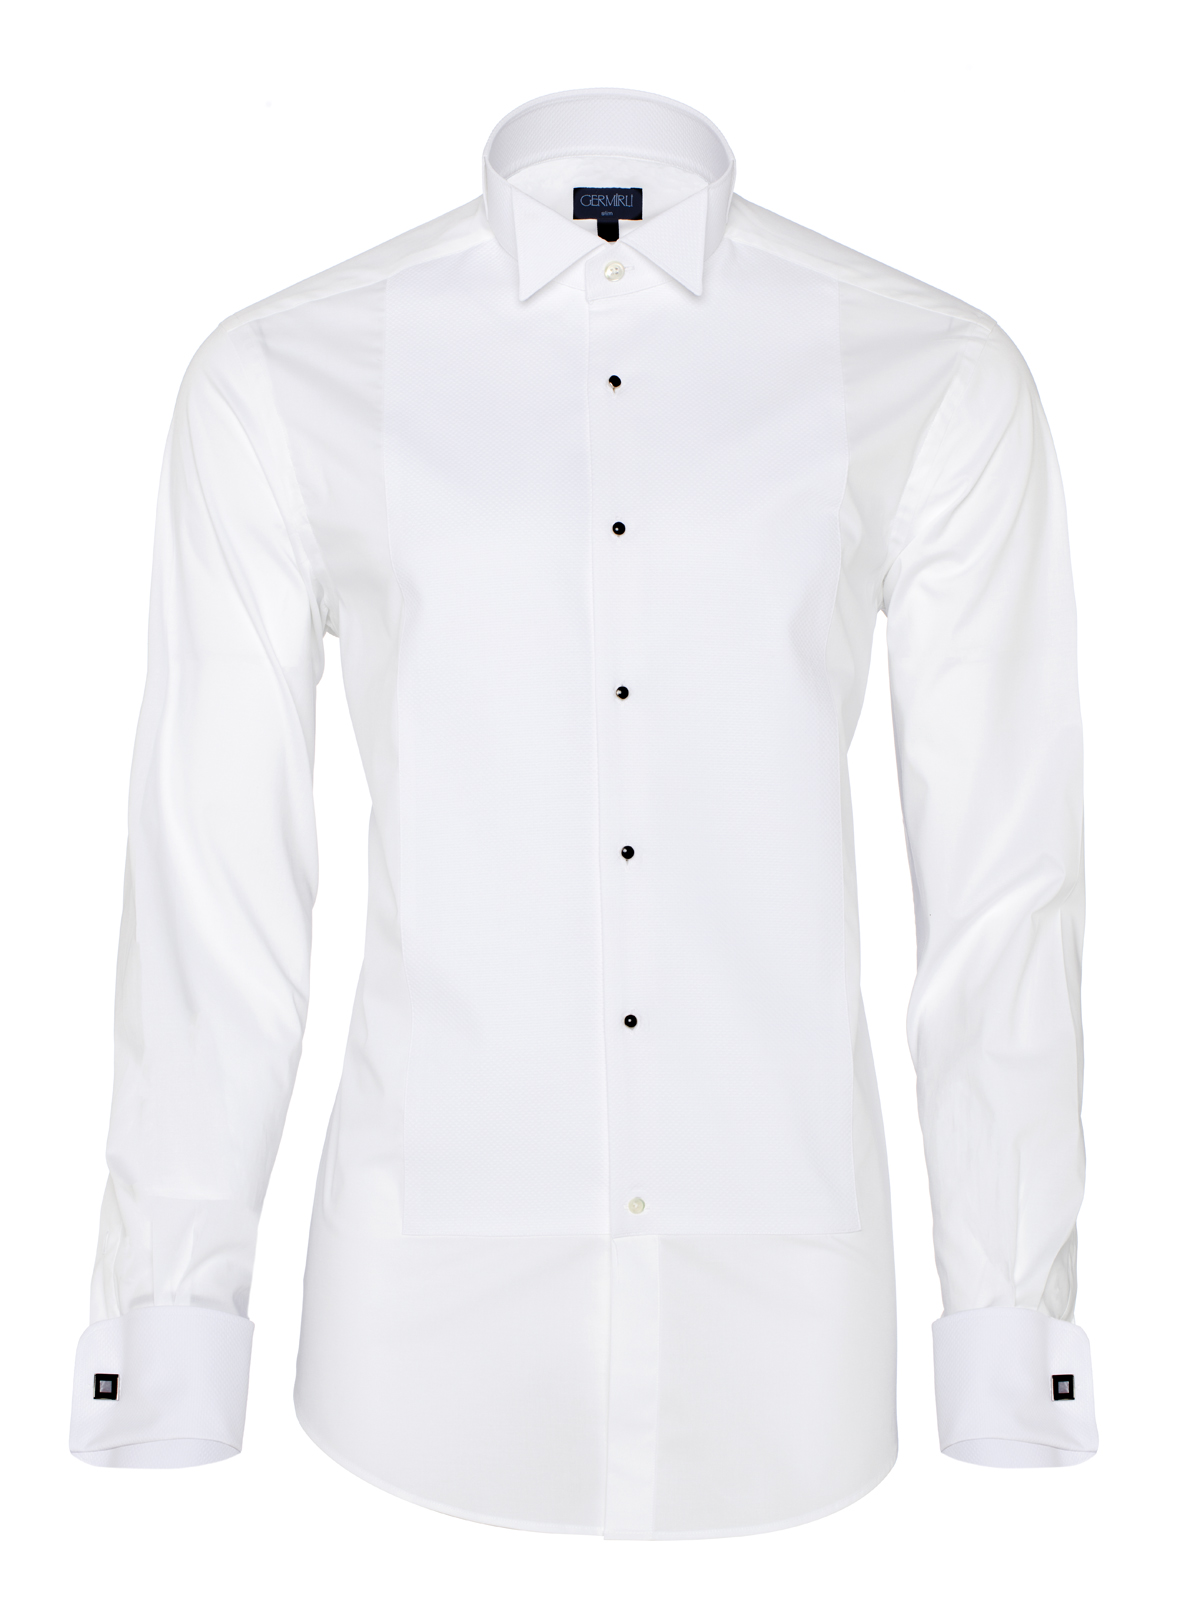 Germirli - Germirli Beyaz Petek Dokulu Ata Yaka Slim Fit Gömlek